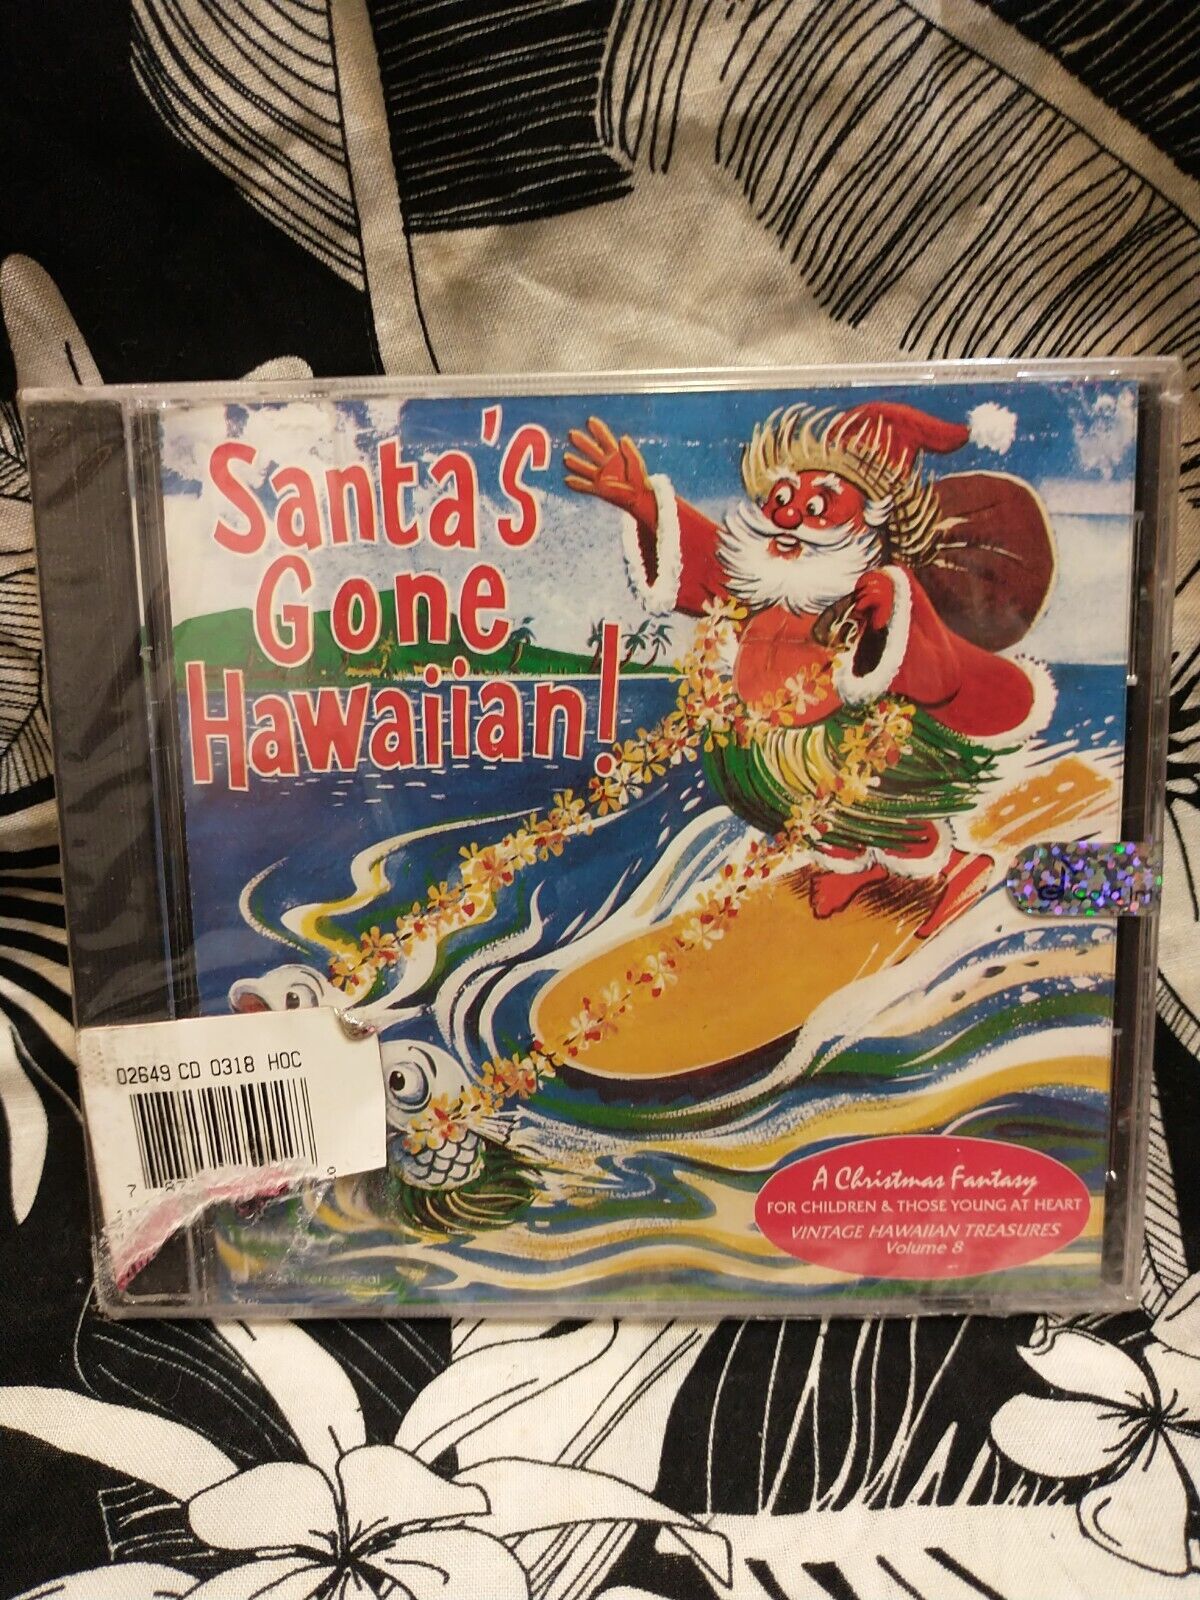 Vintage Hawaiian Treasures Vol. 8 Santa's Gone Hawaiian CD - RARE - New & Sealed